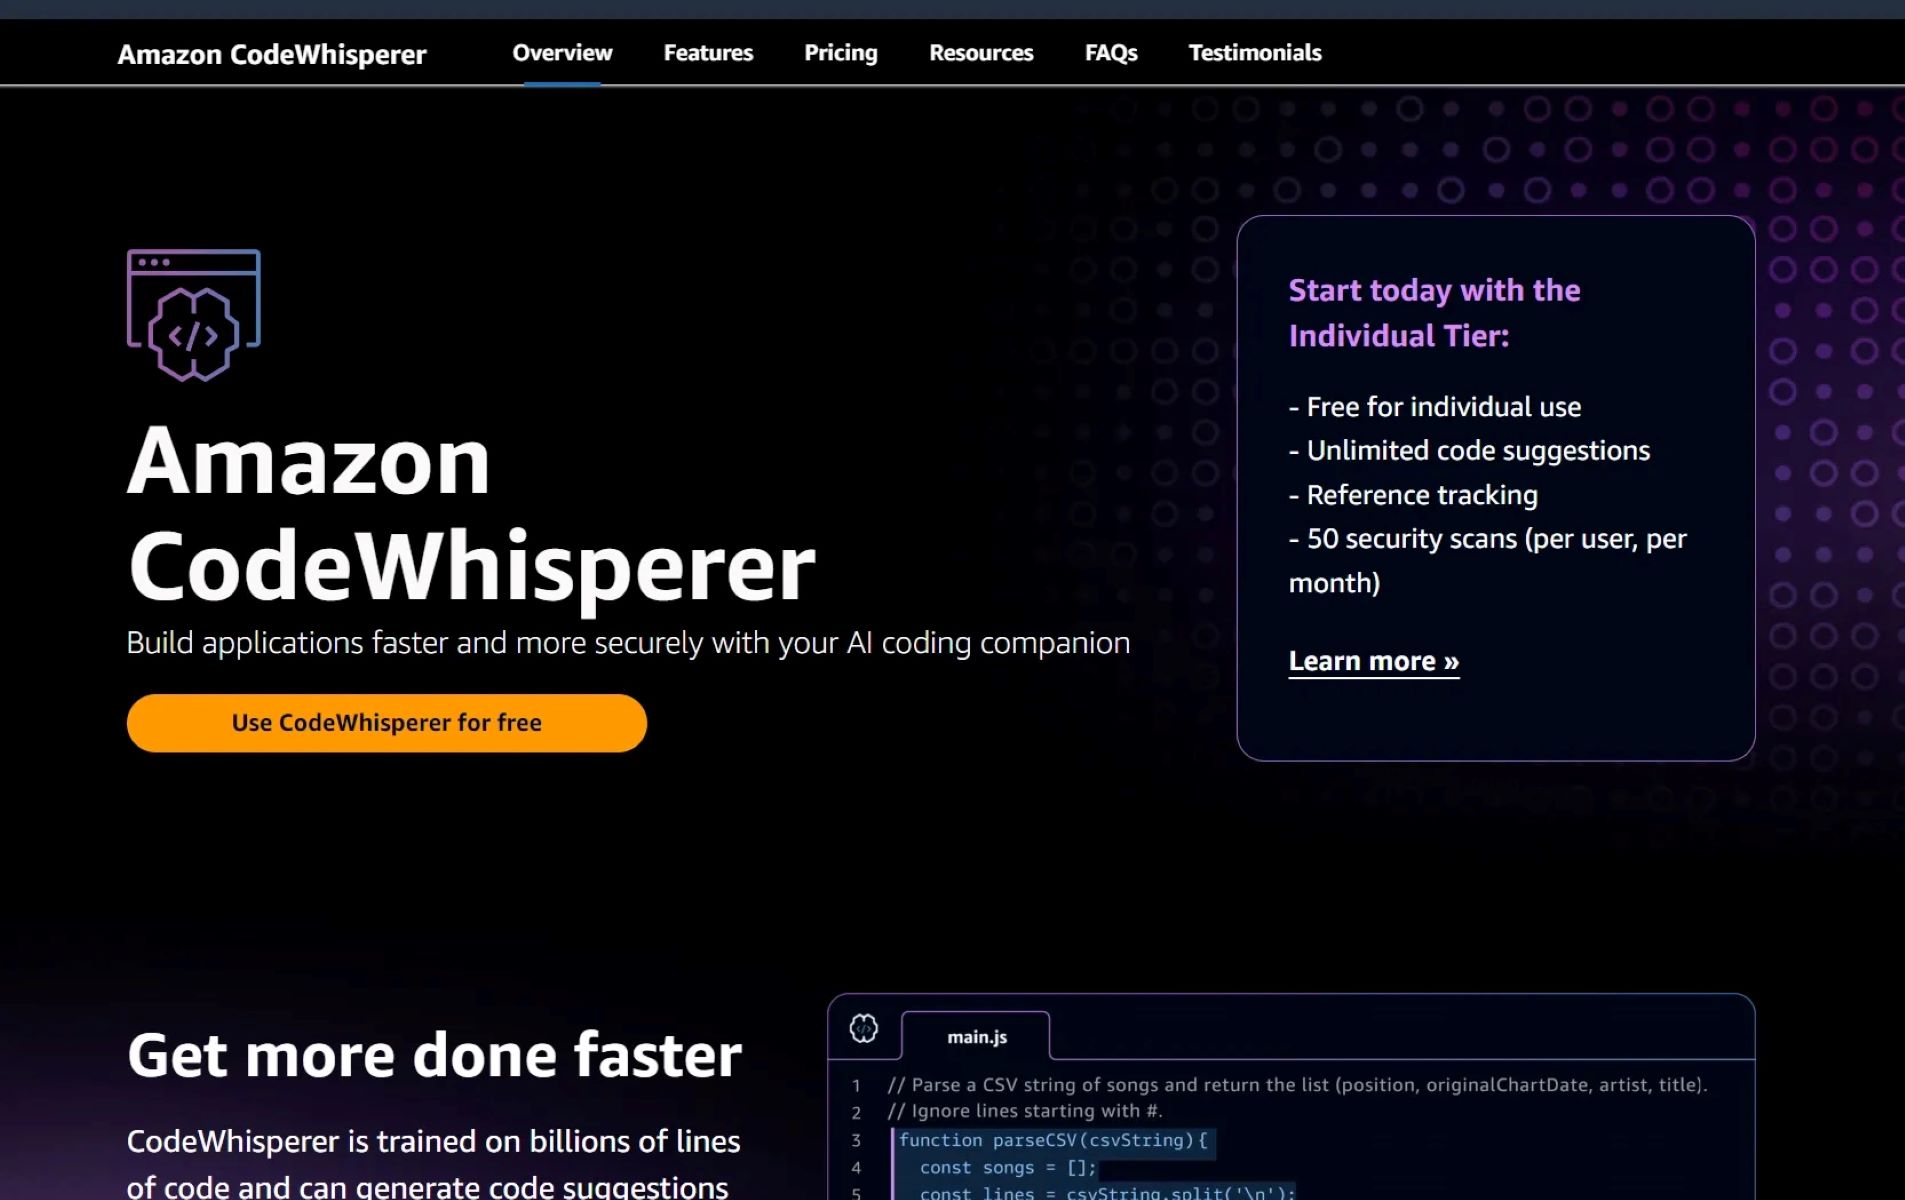 Amazon Unveils CodeWhisperer Enterprise Tier To Enhance Code Suggestions